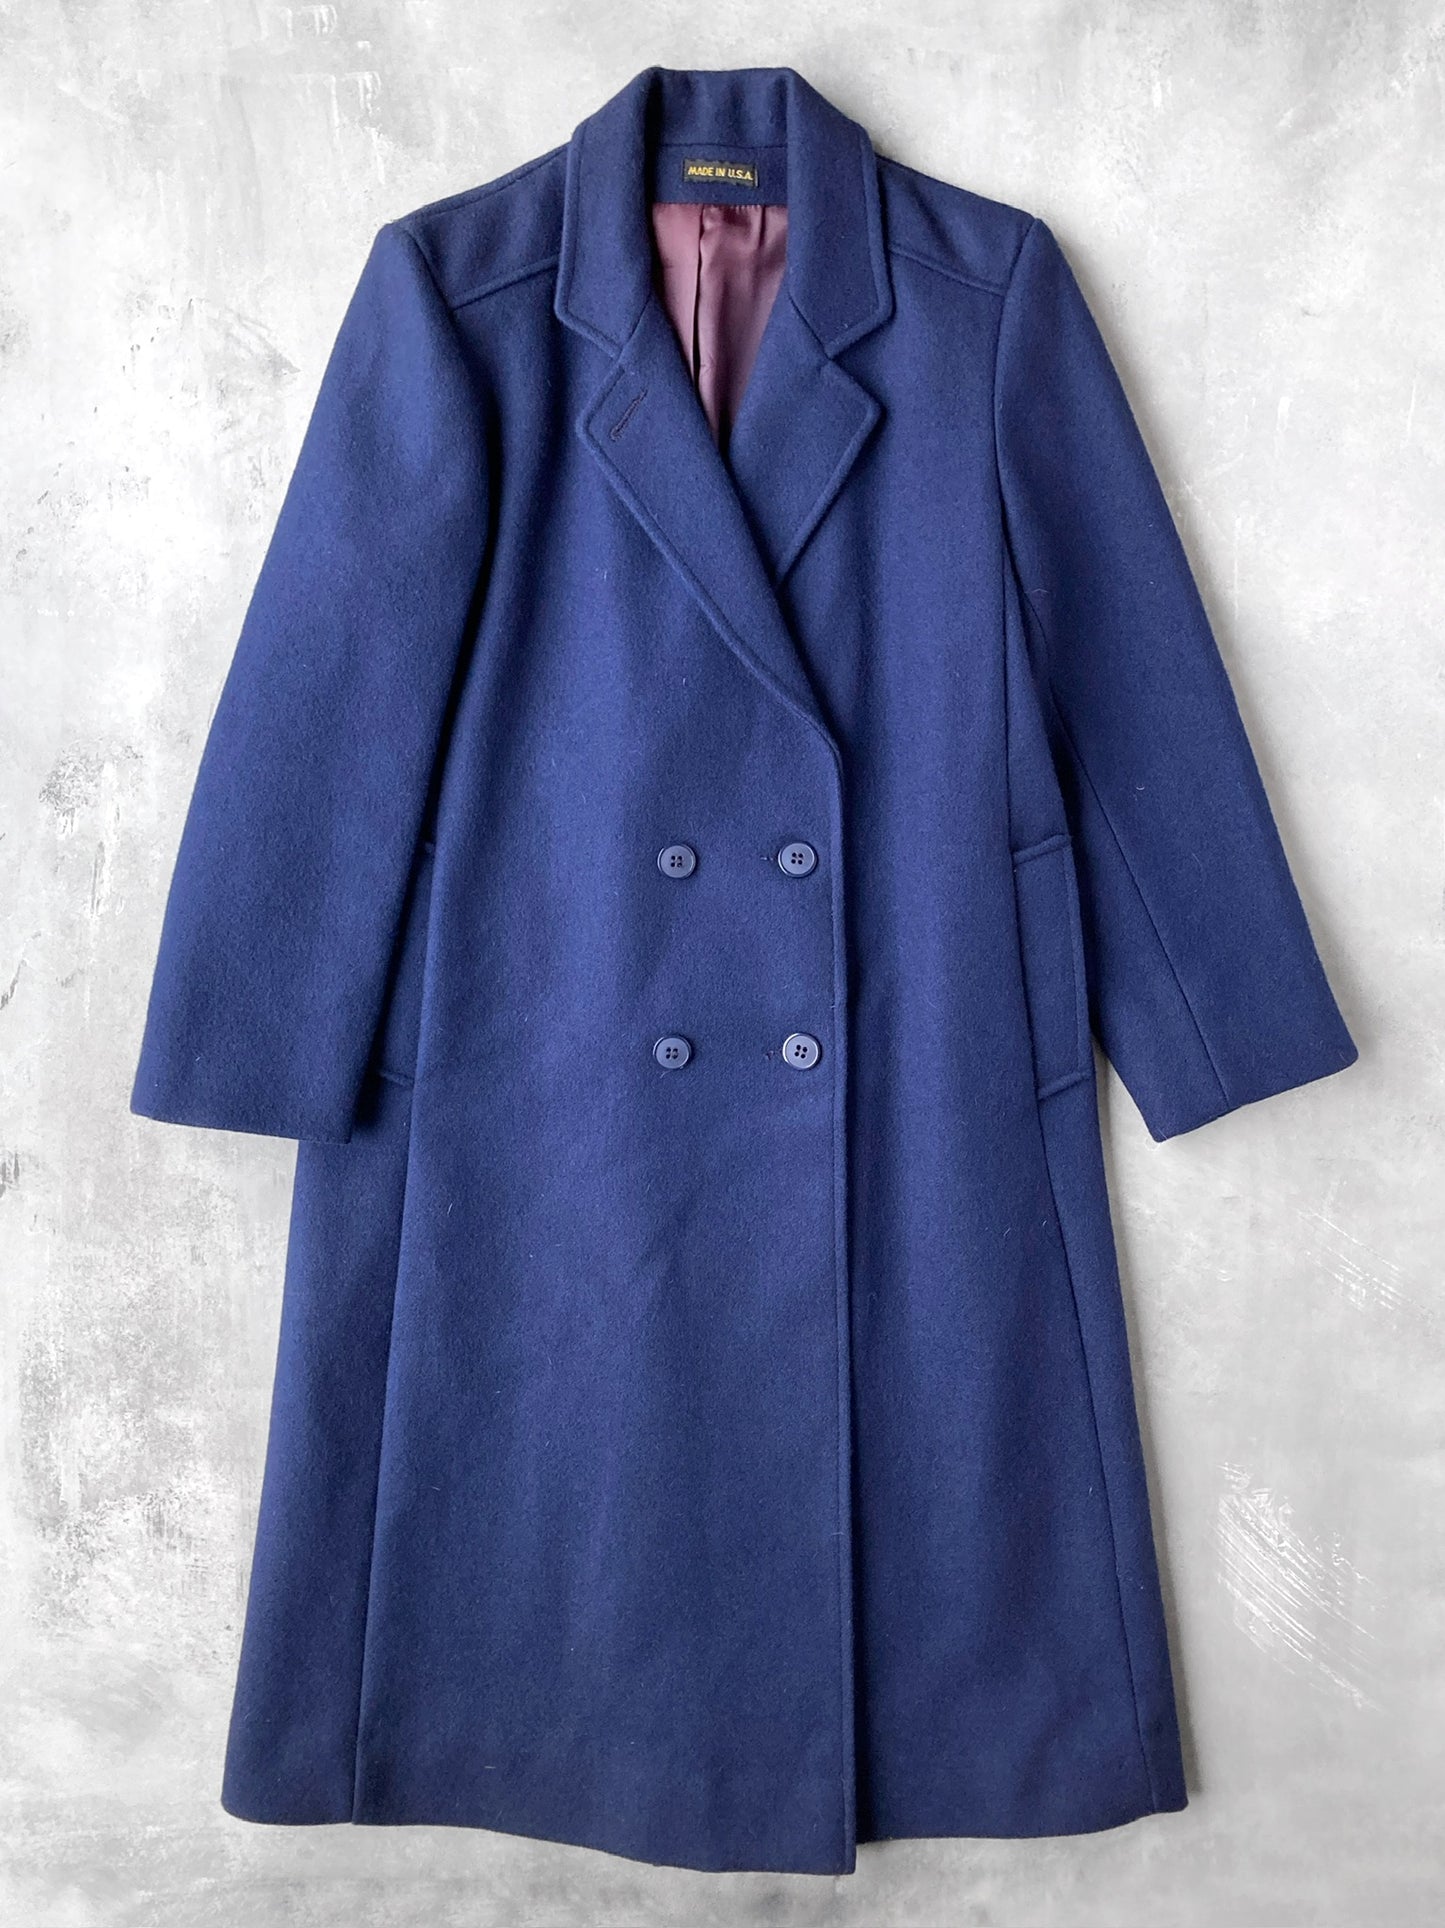 Wool Overcoat 90's - Small